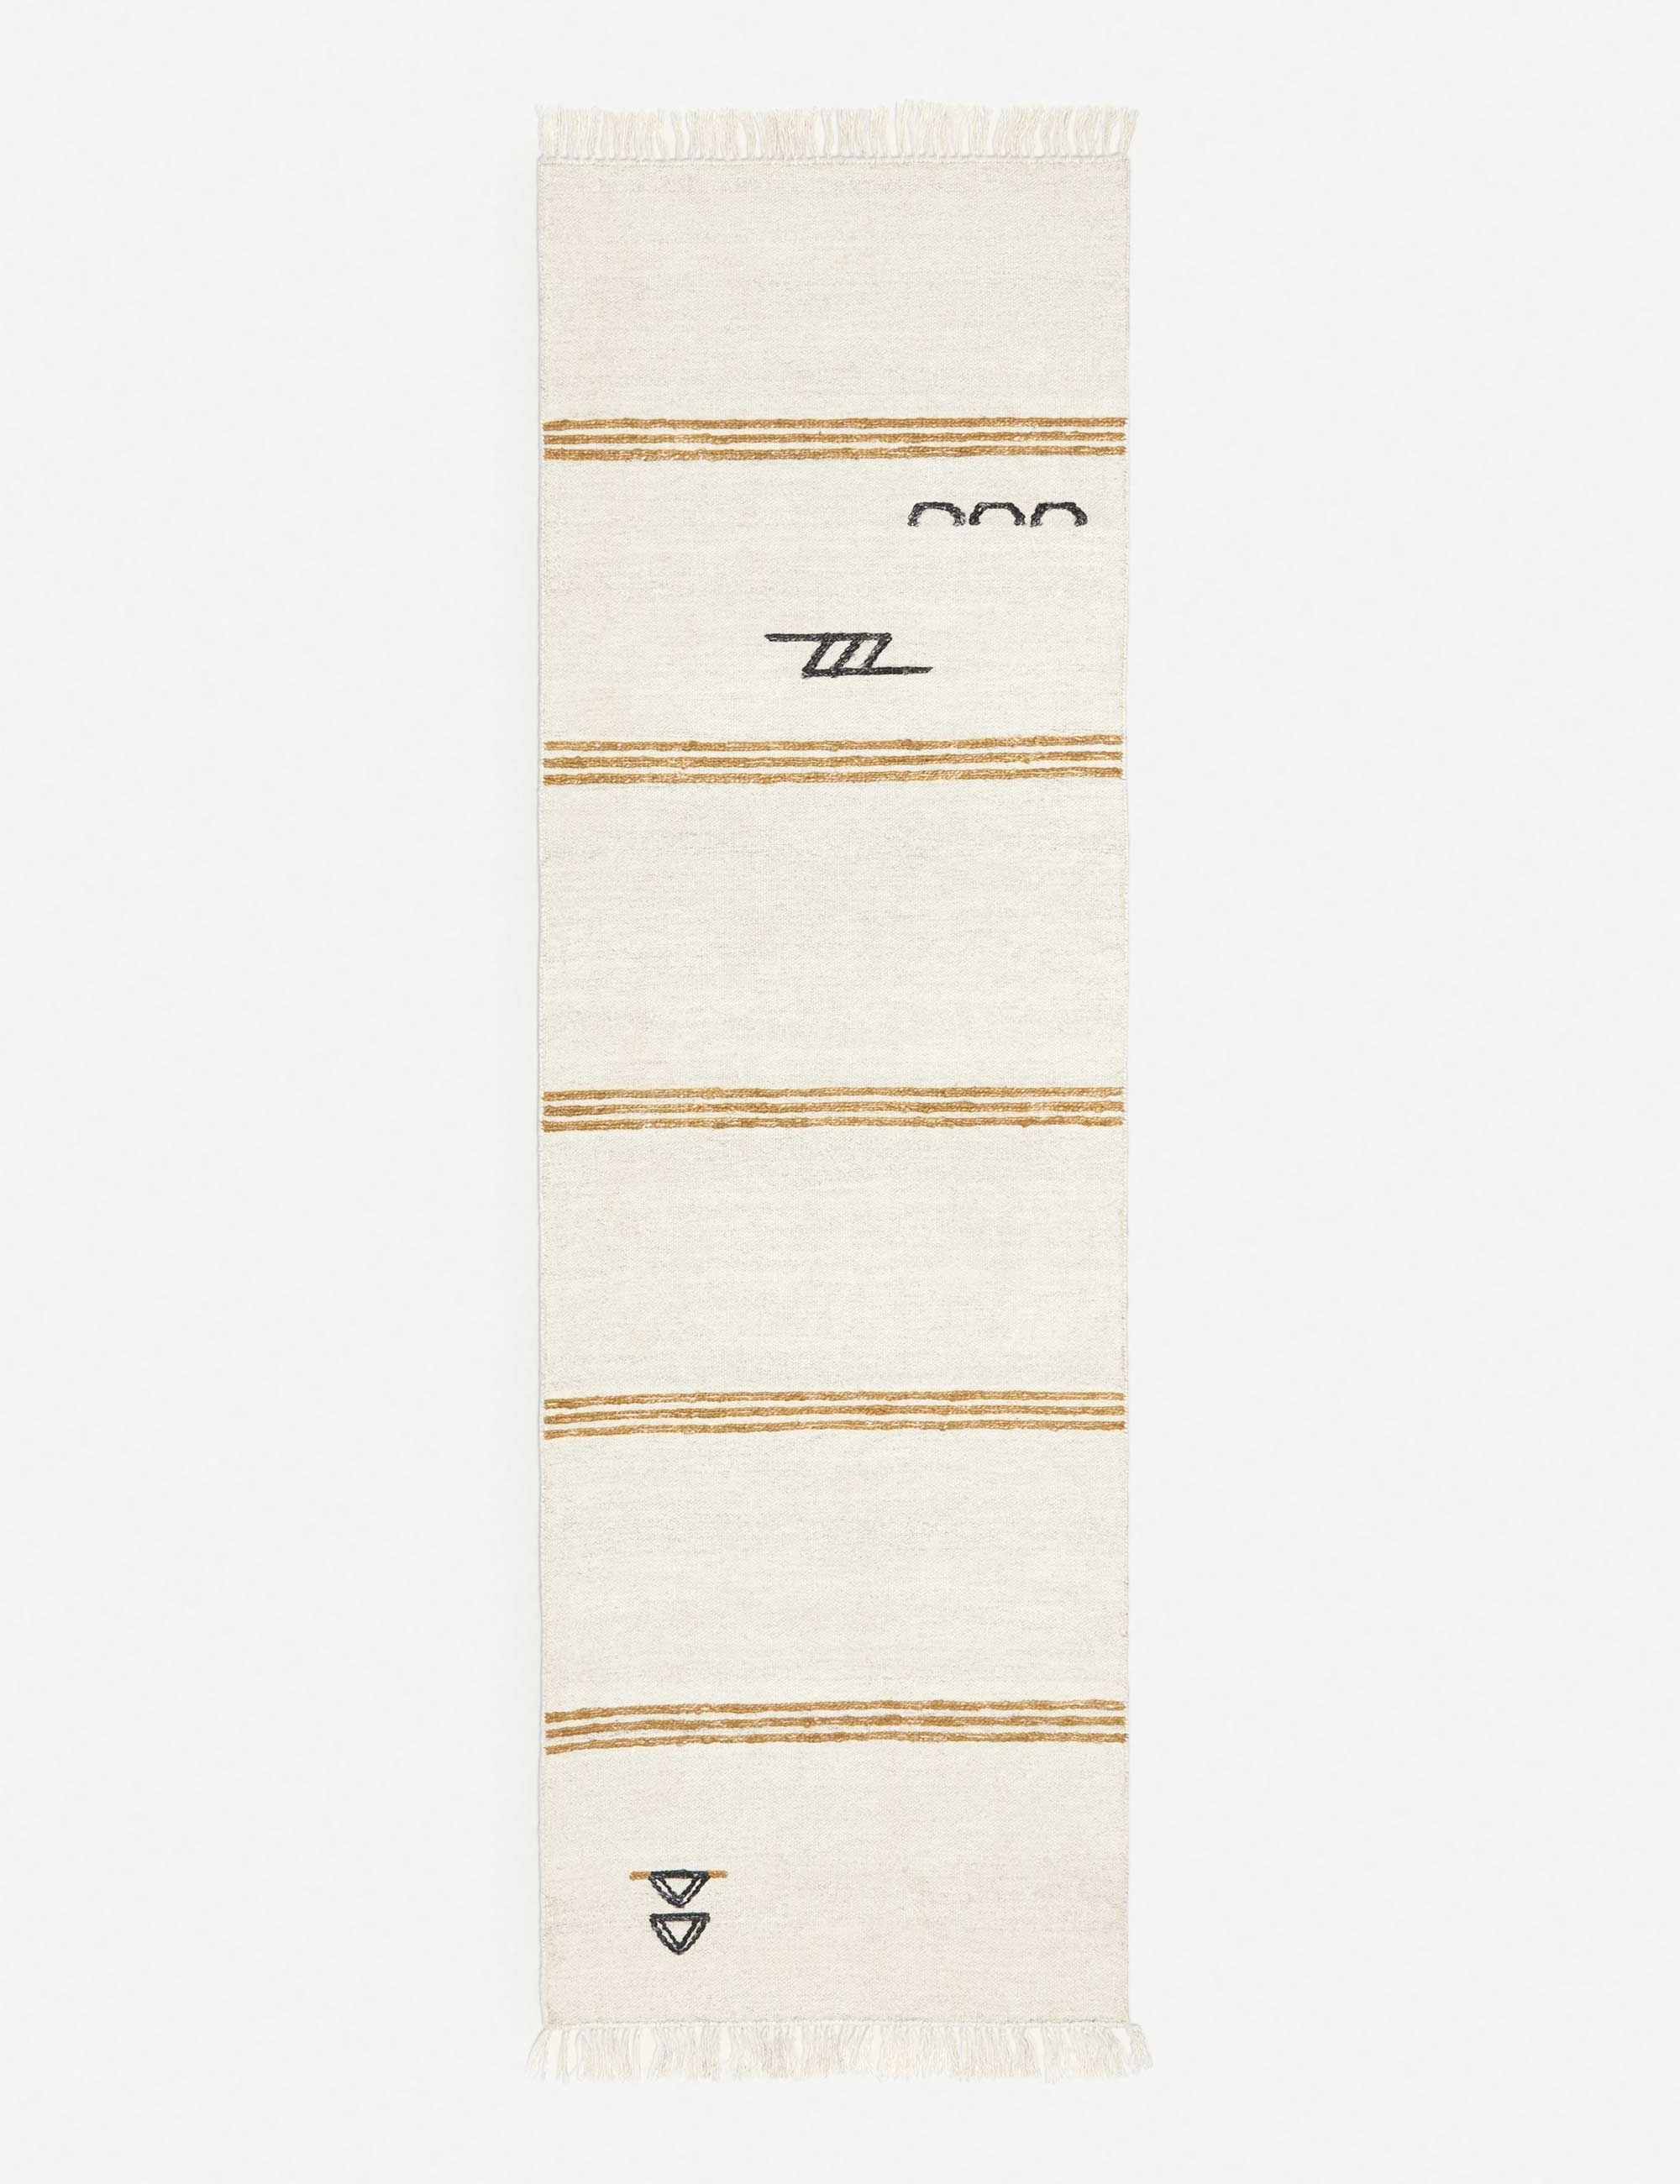 Iconic Stripe Rug By Sarah Sherman Samuel 9' x 12' - Image 6